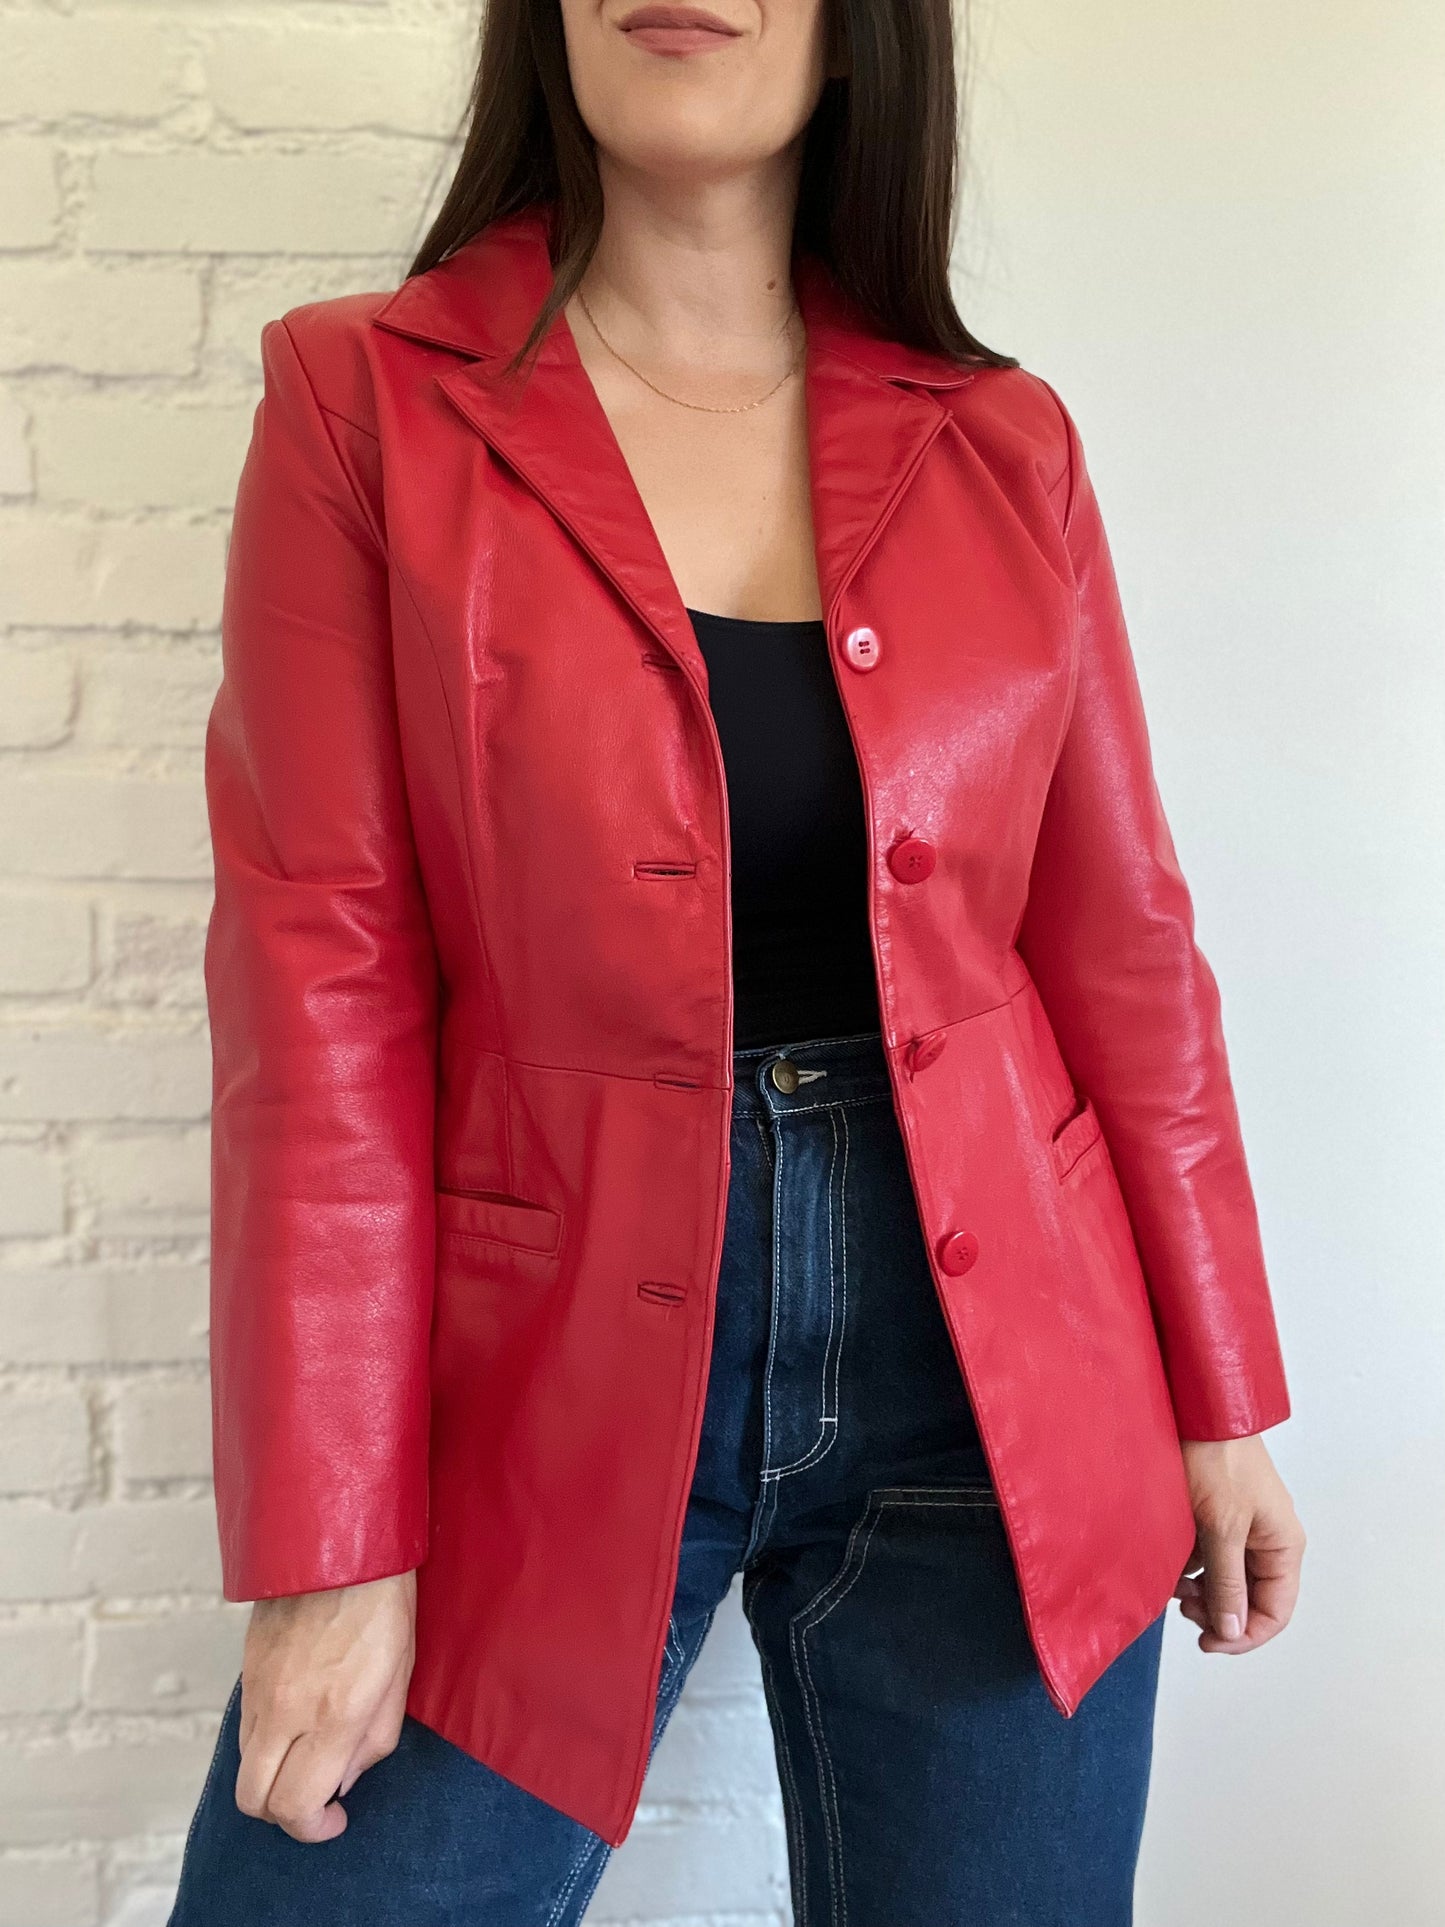 Vintage Danier Red Leather Jacket - Size M